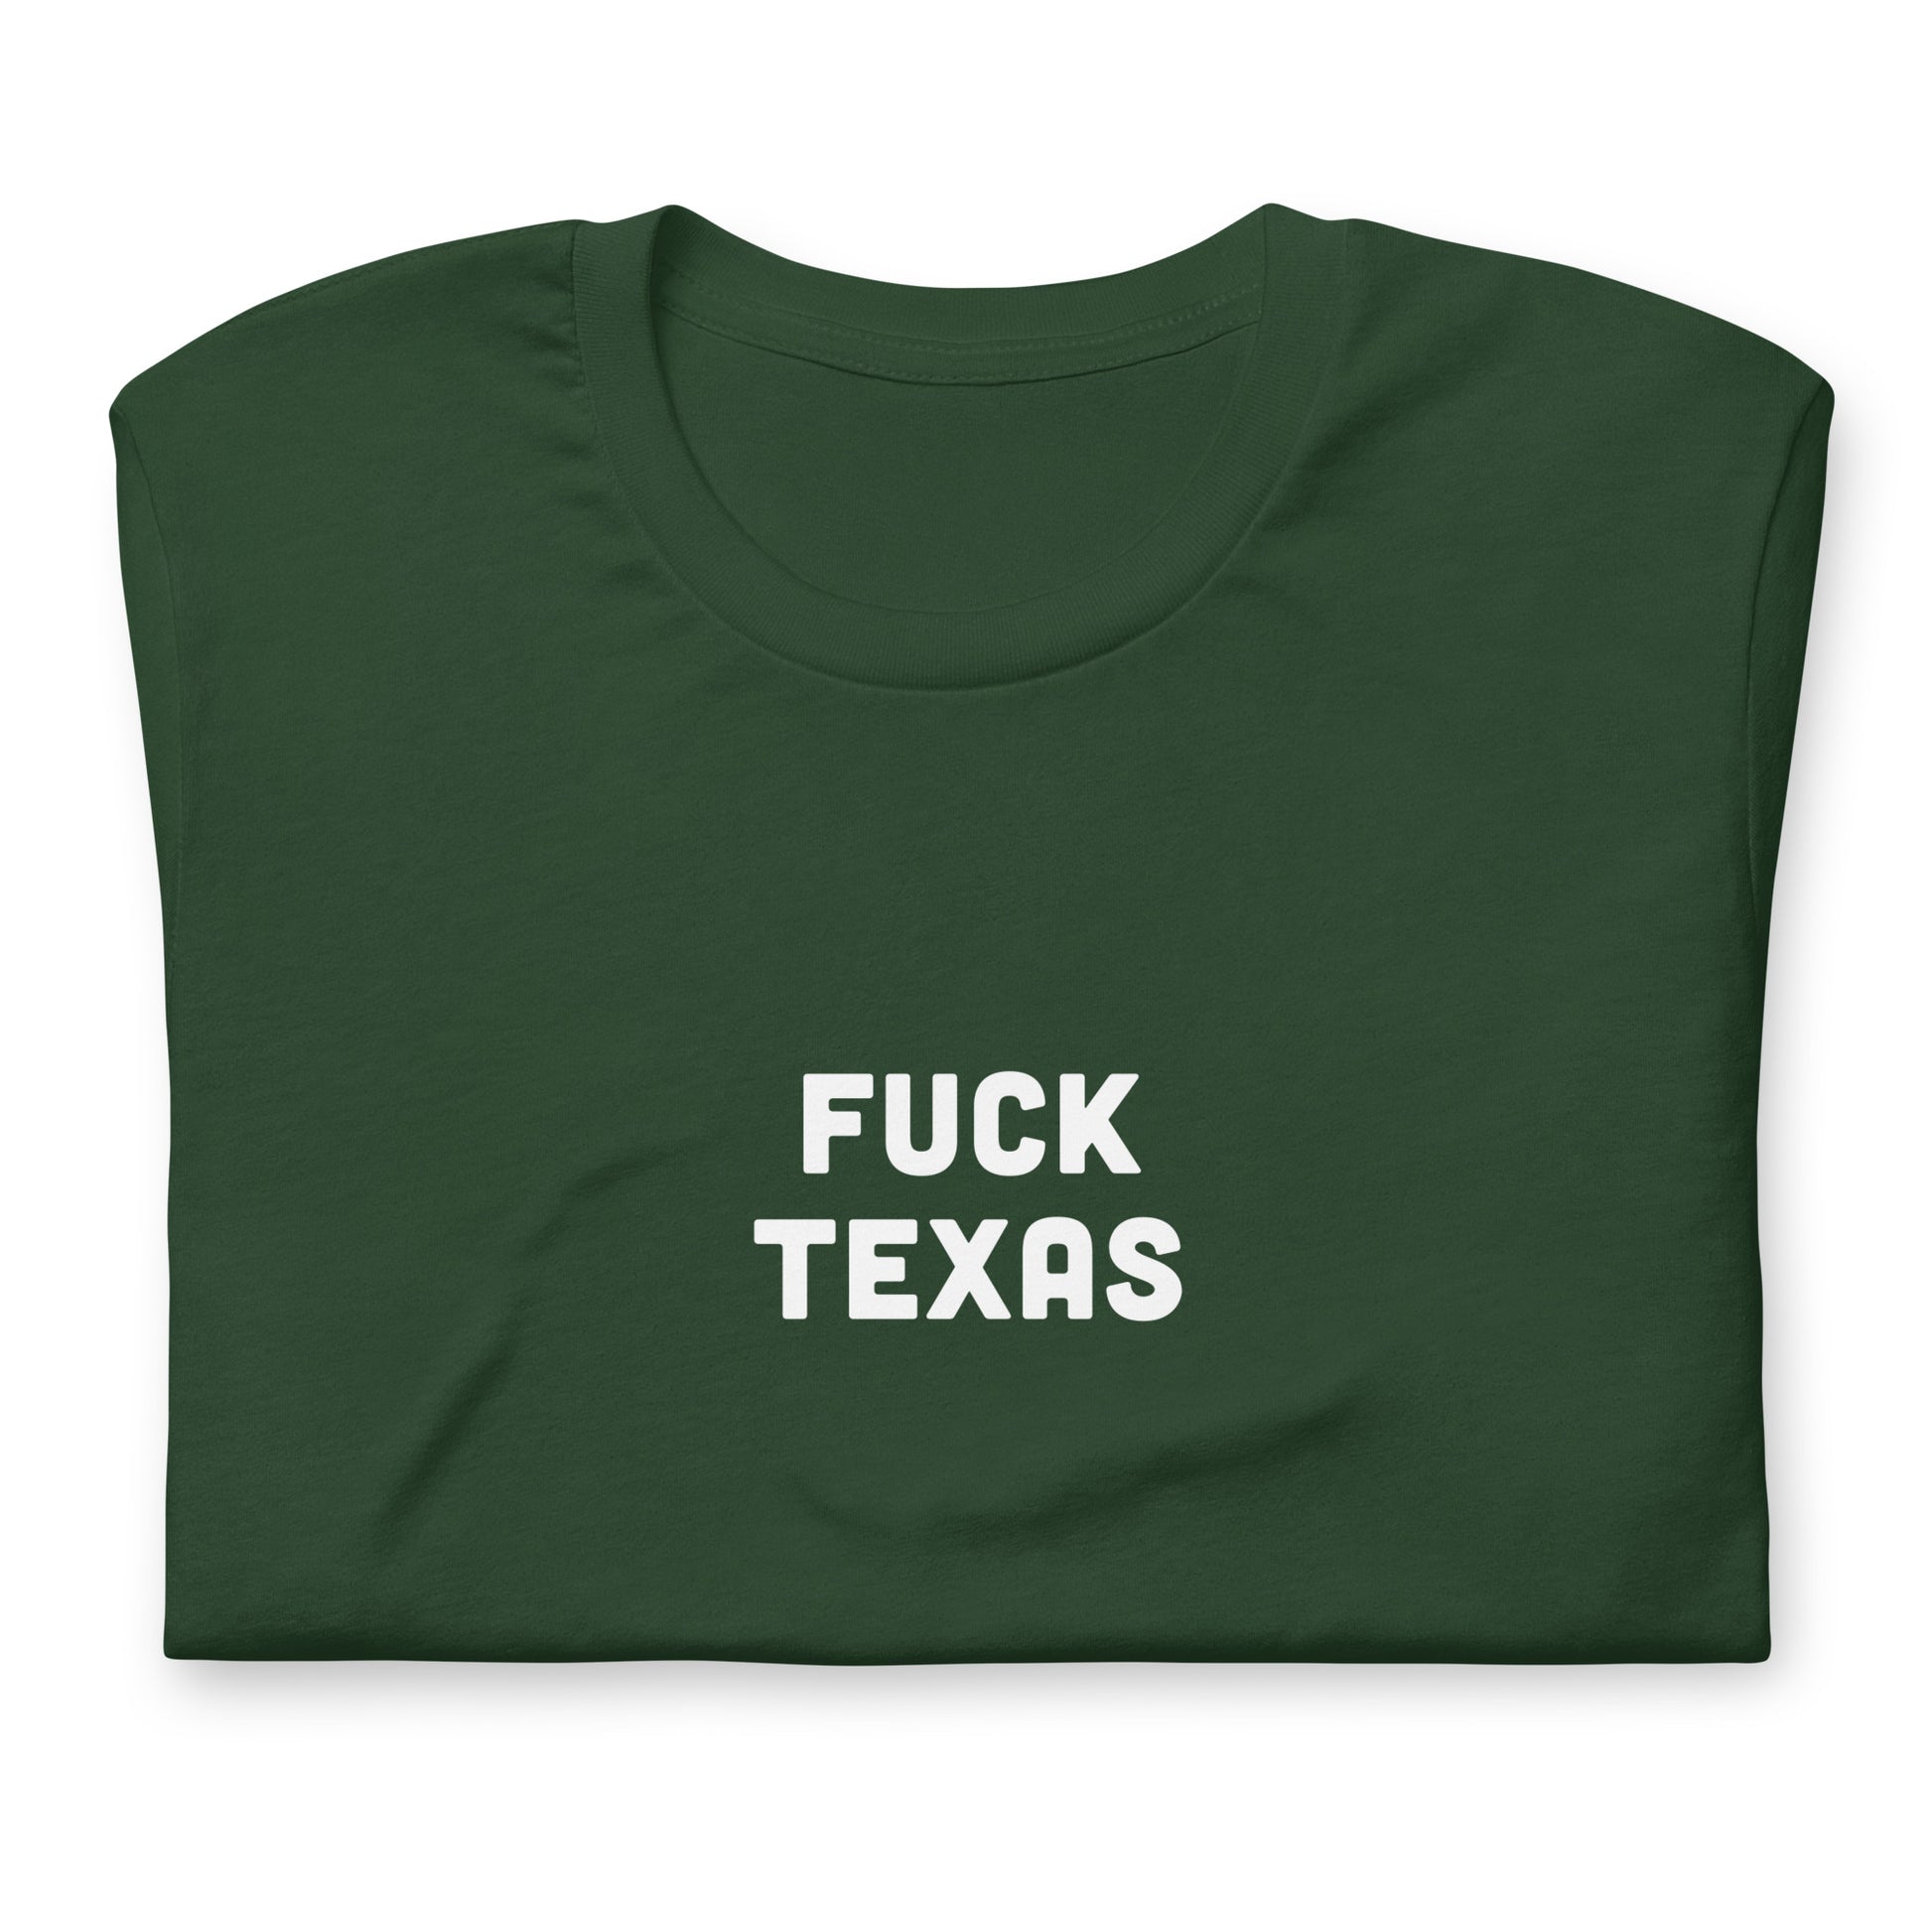 Fuck Texas T-Shirt Size M Color Navy